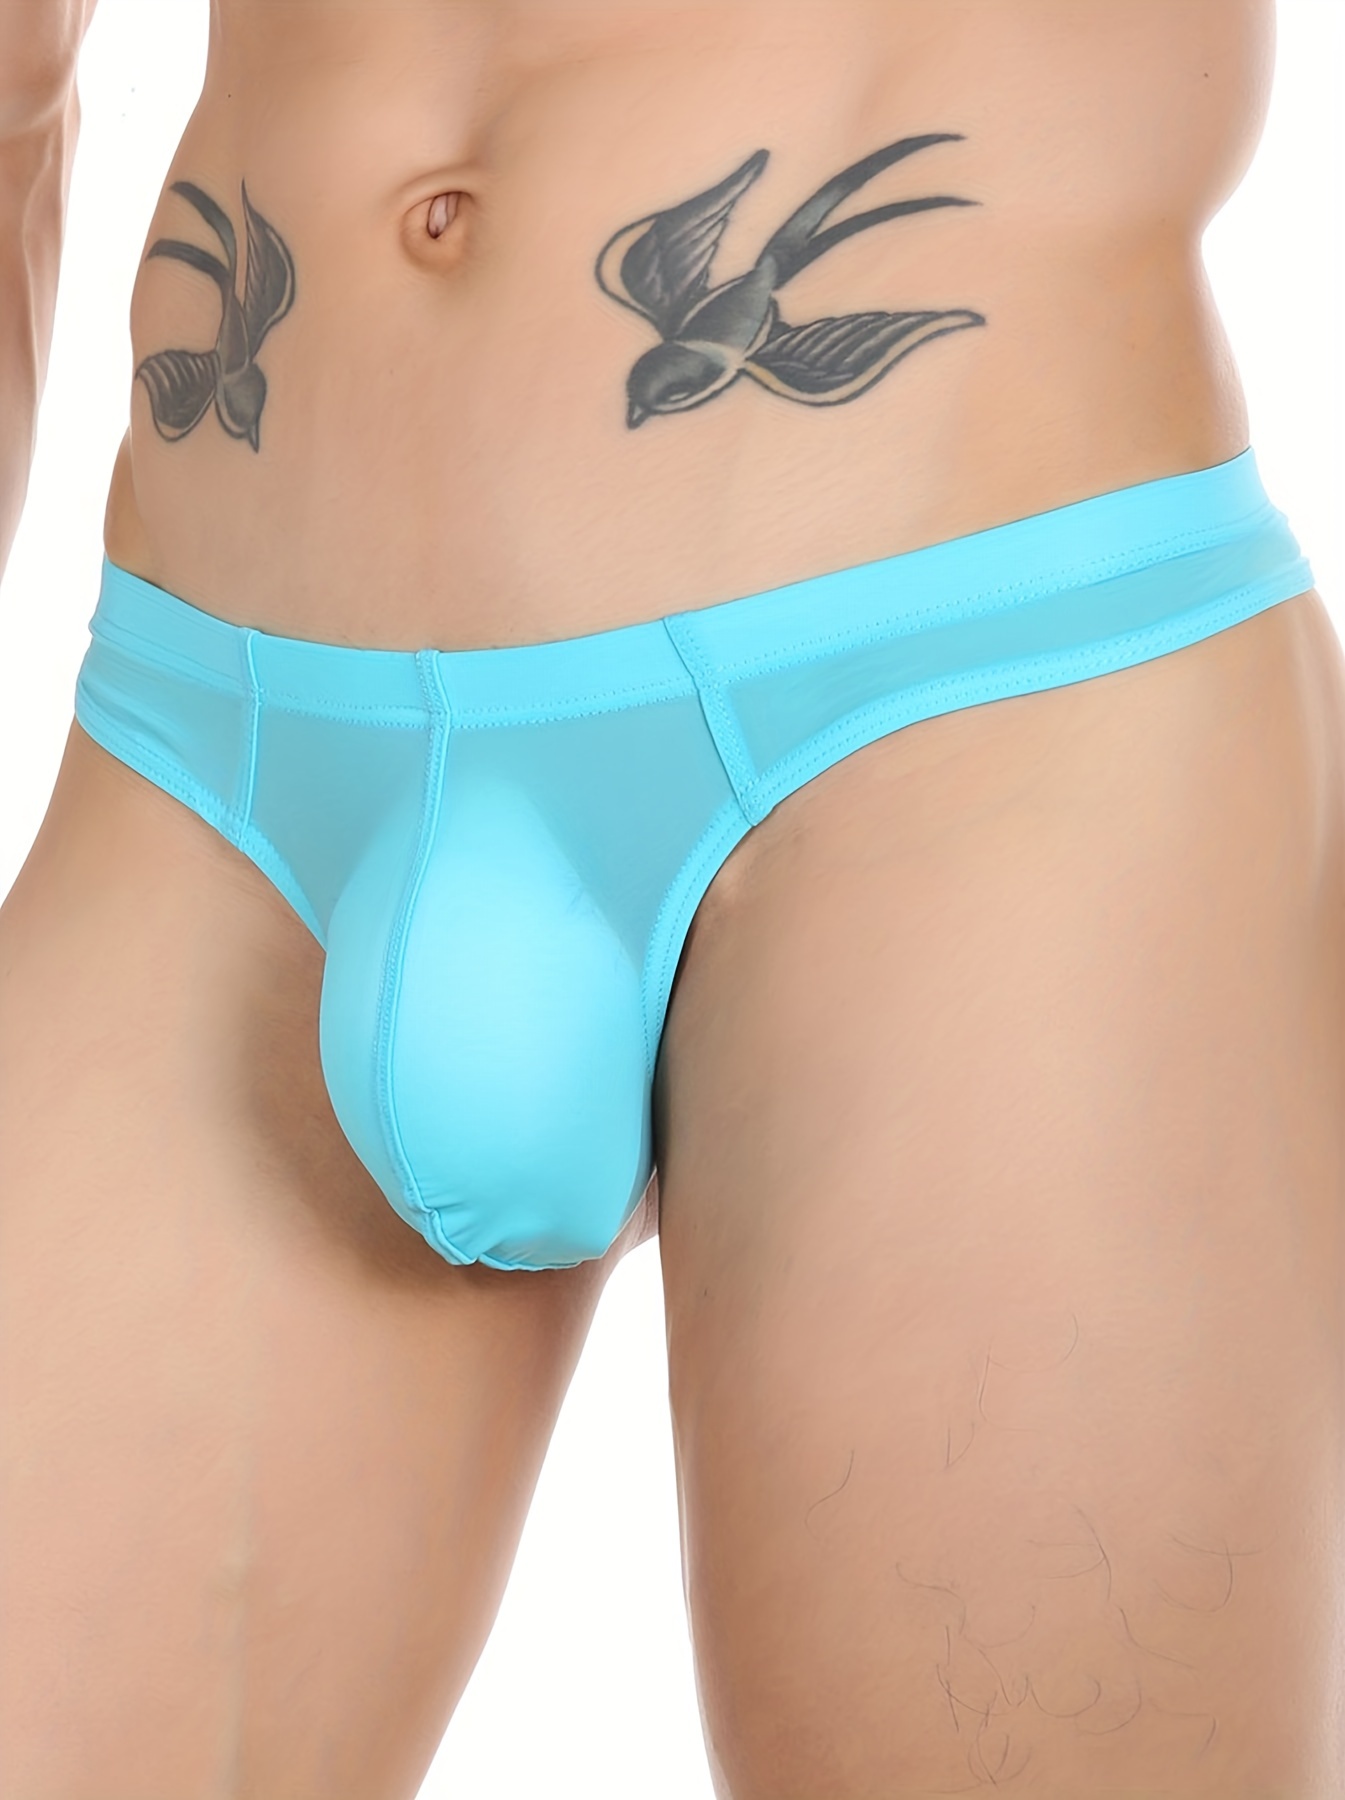 Mens See-through Briefs Sexy Sheer Underwear Panties Lingerie 